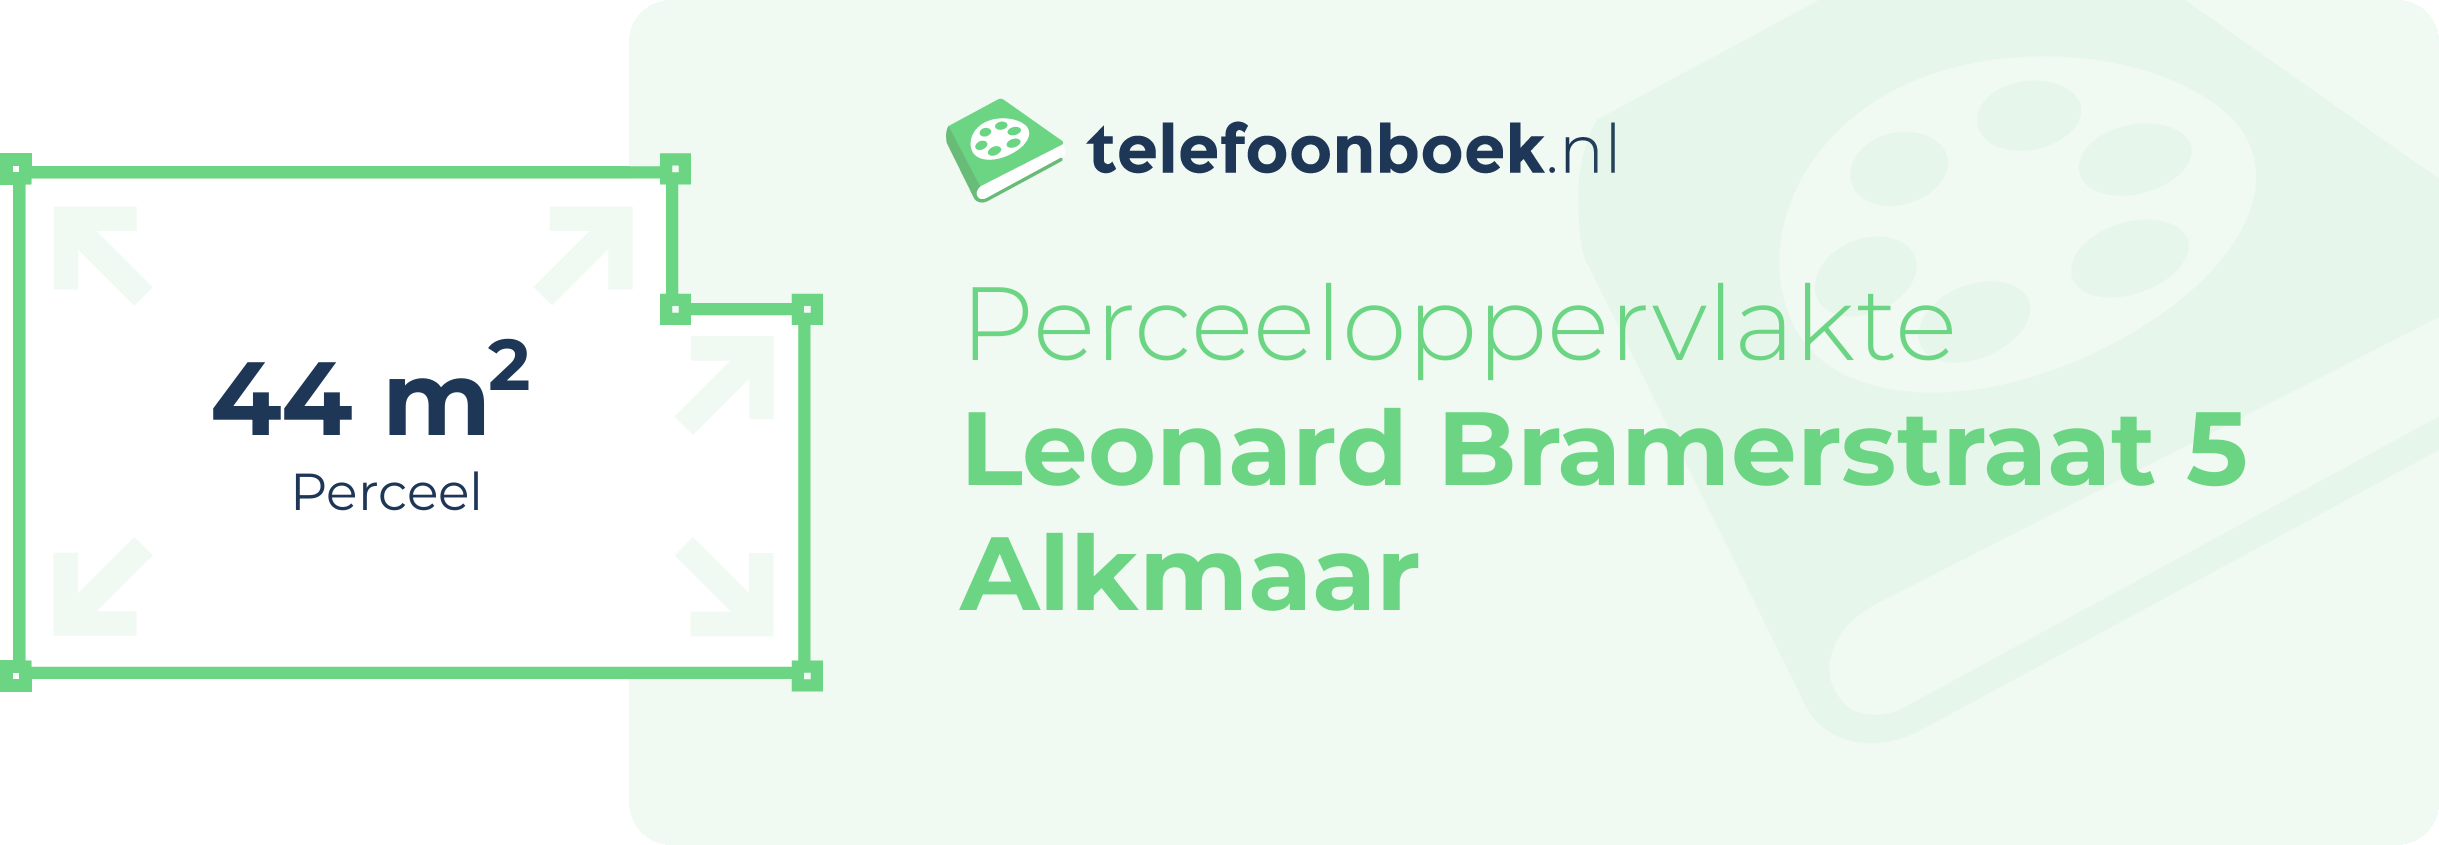 Perceeloppervlakte Leonard Bramerstraat 5 Alkmaar